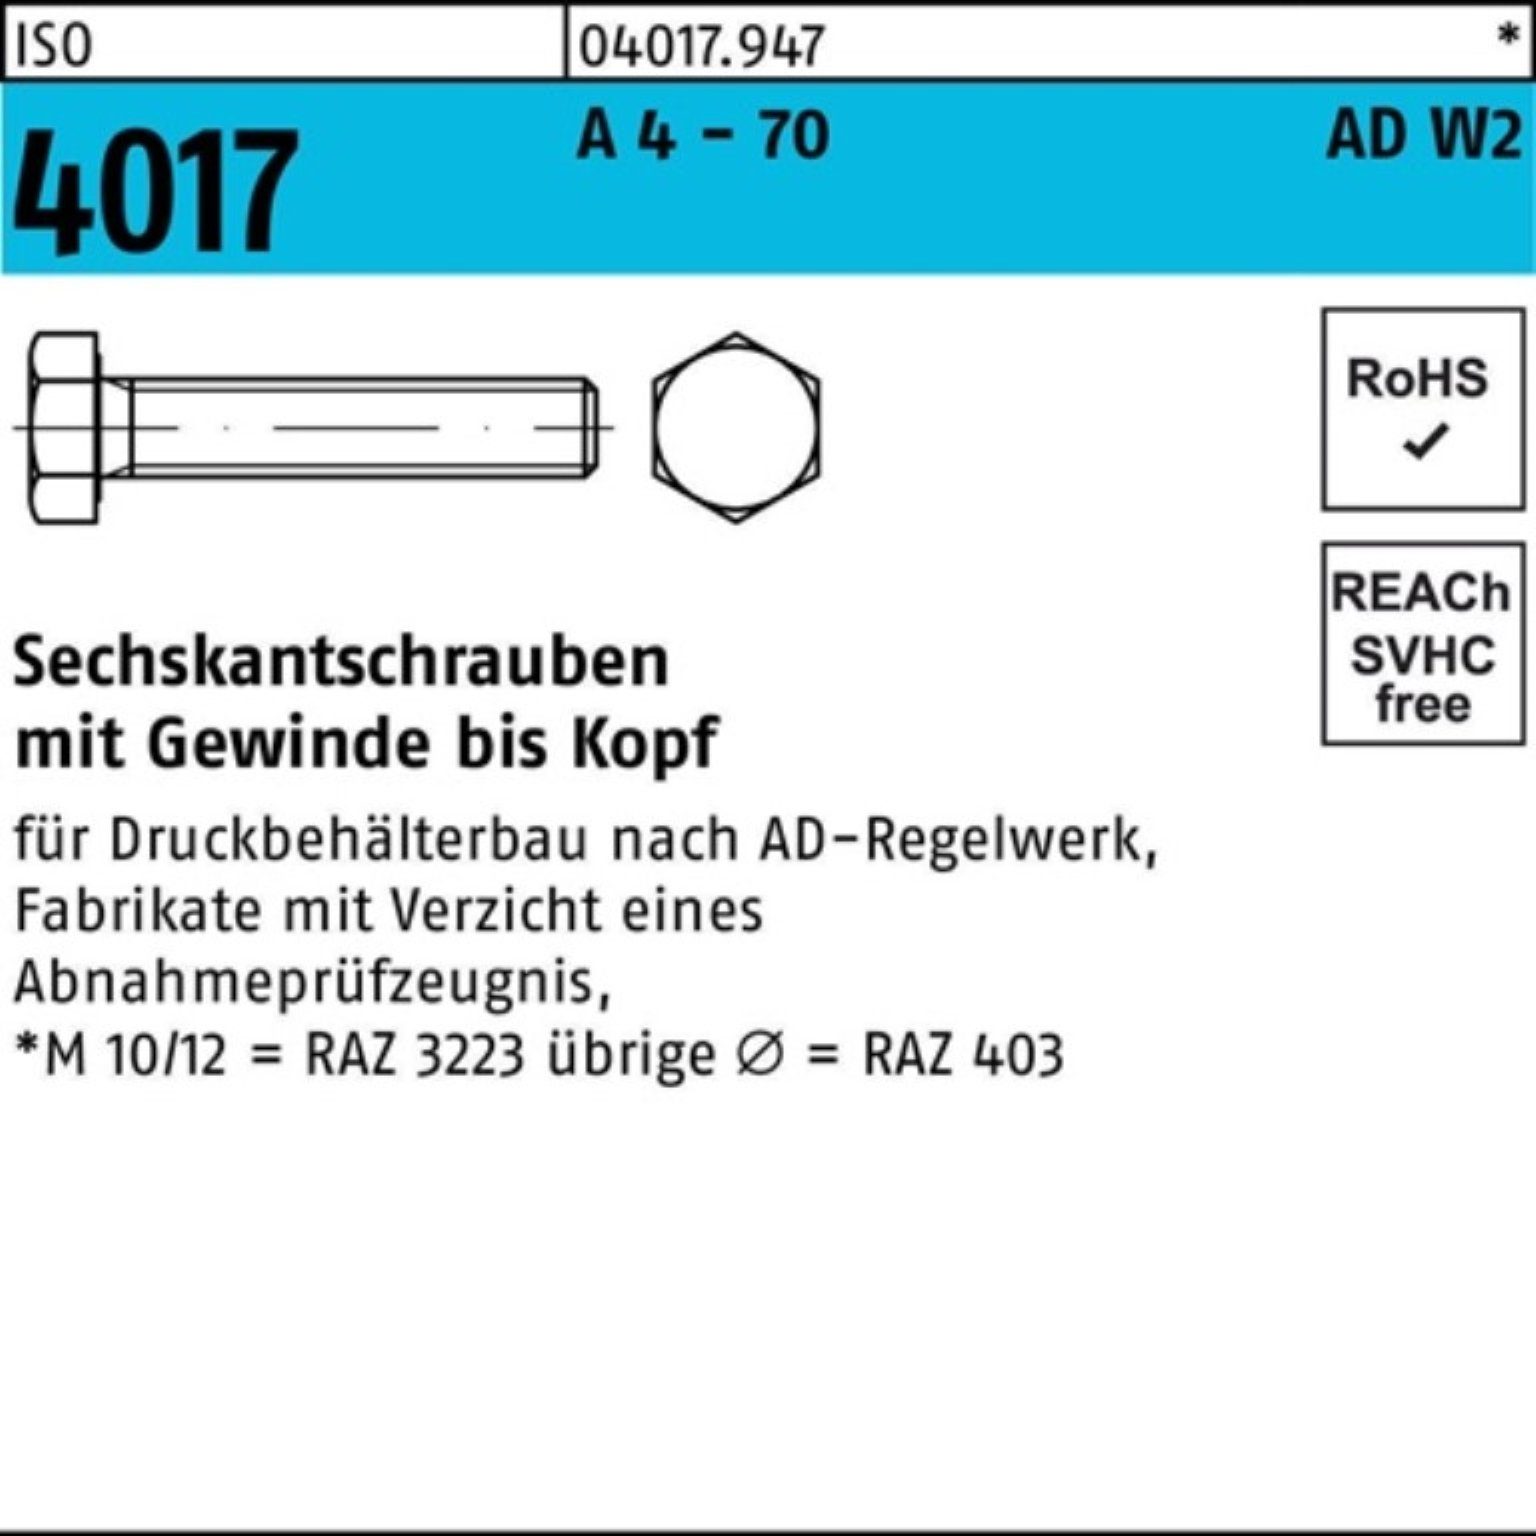 Bufab Sechskantschraube 200er Pack Sechskantschraube ISO 4017 VG M6x 16 A 4 - 70 AD-W2 200 St